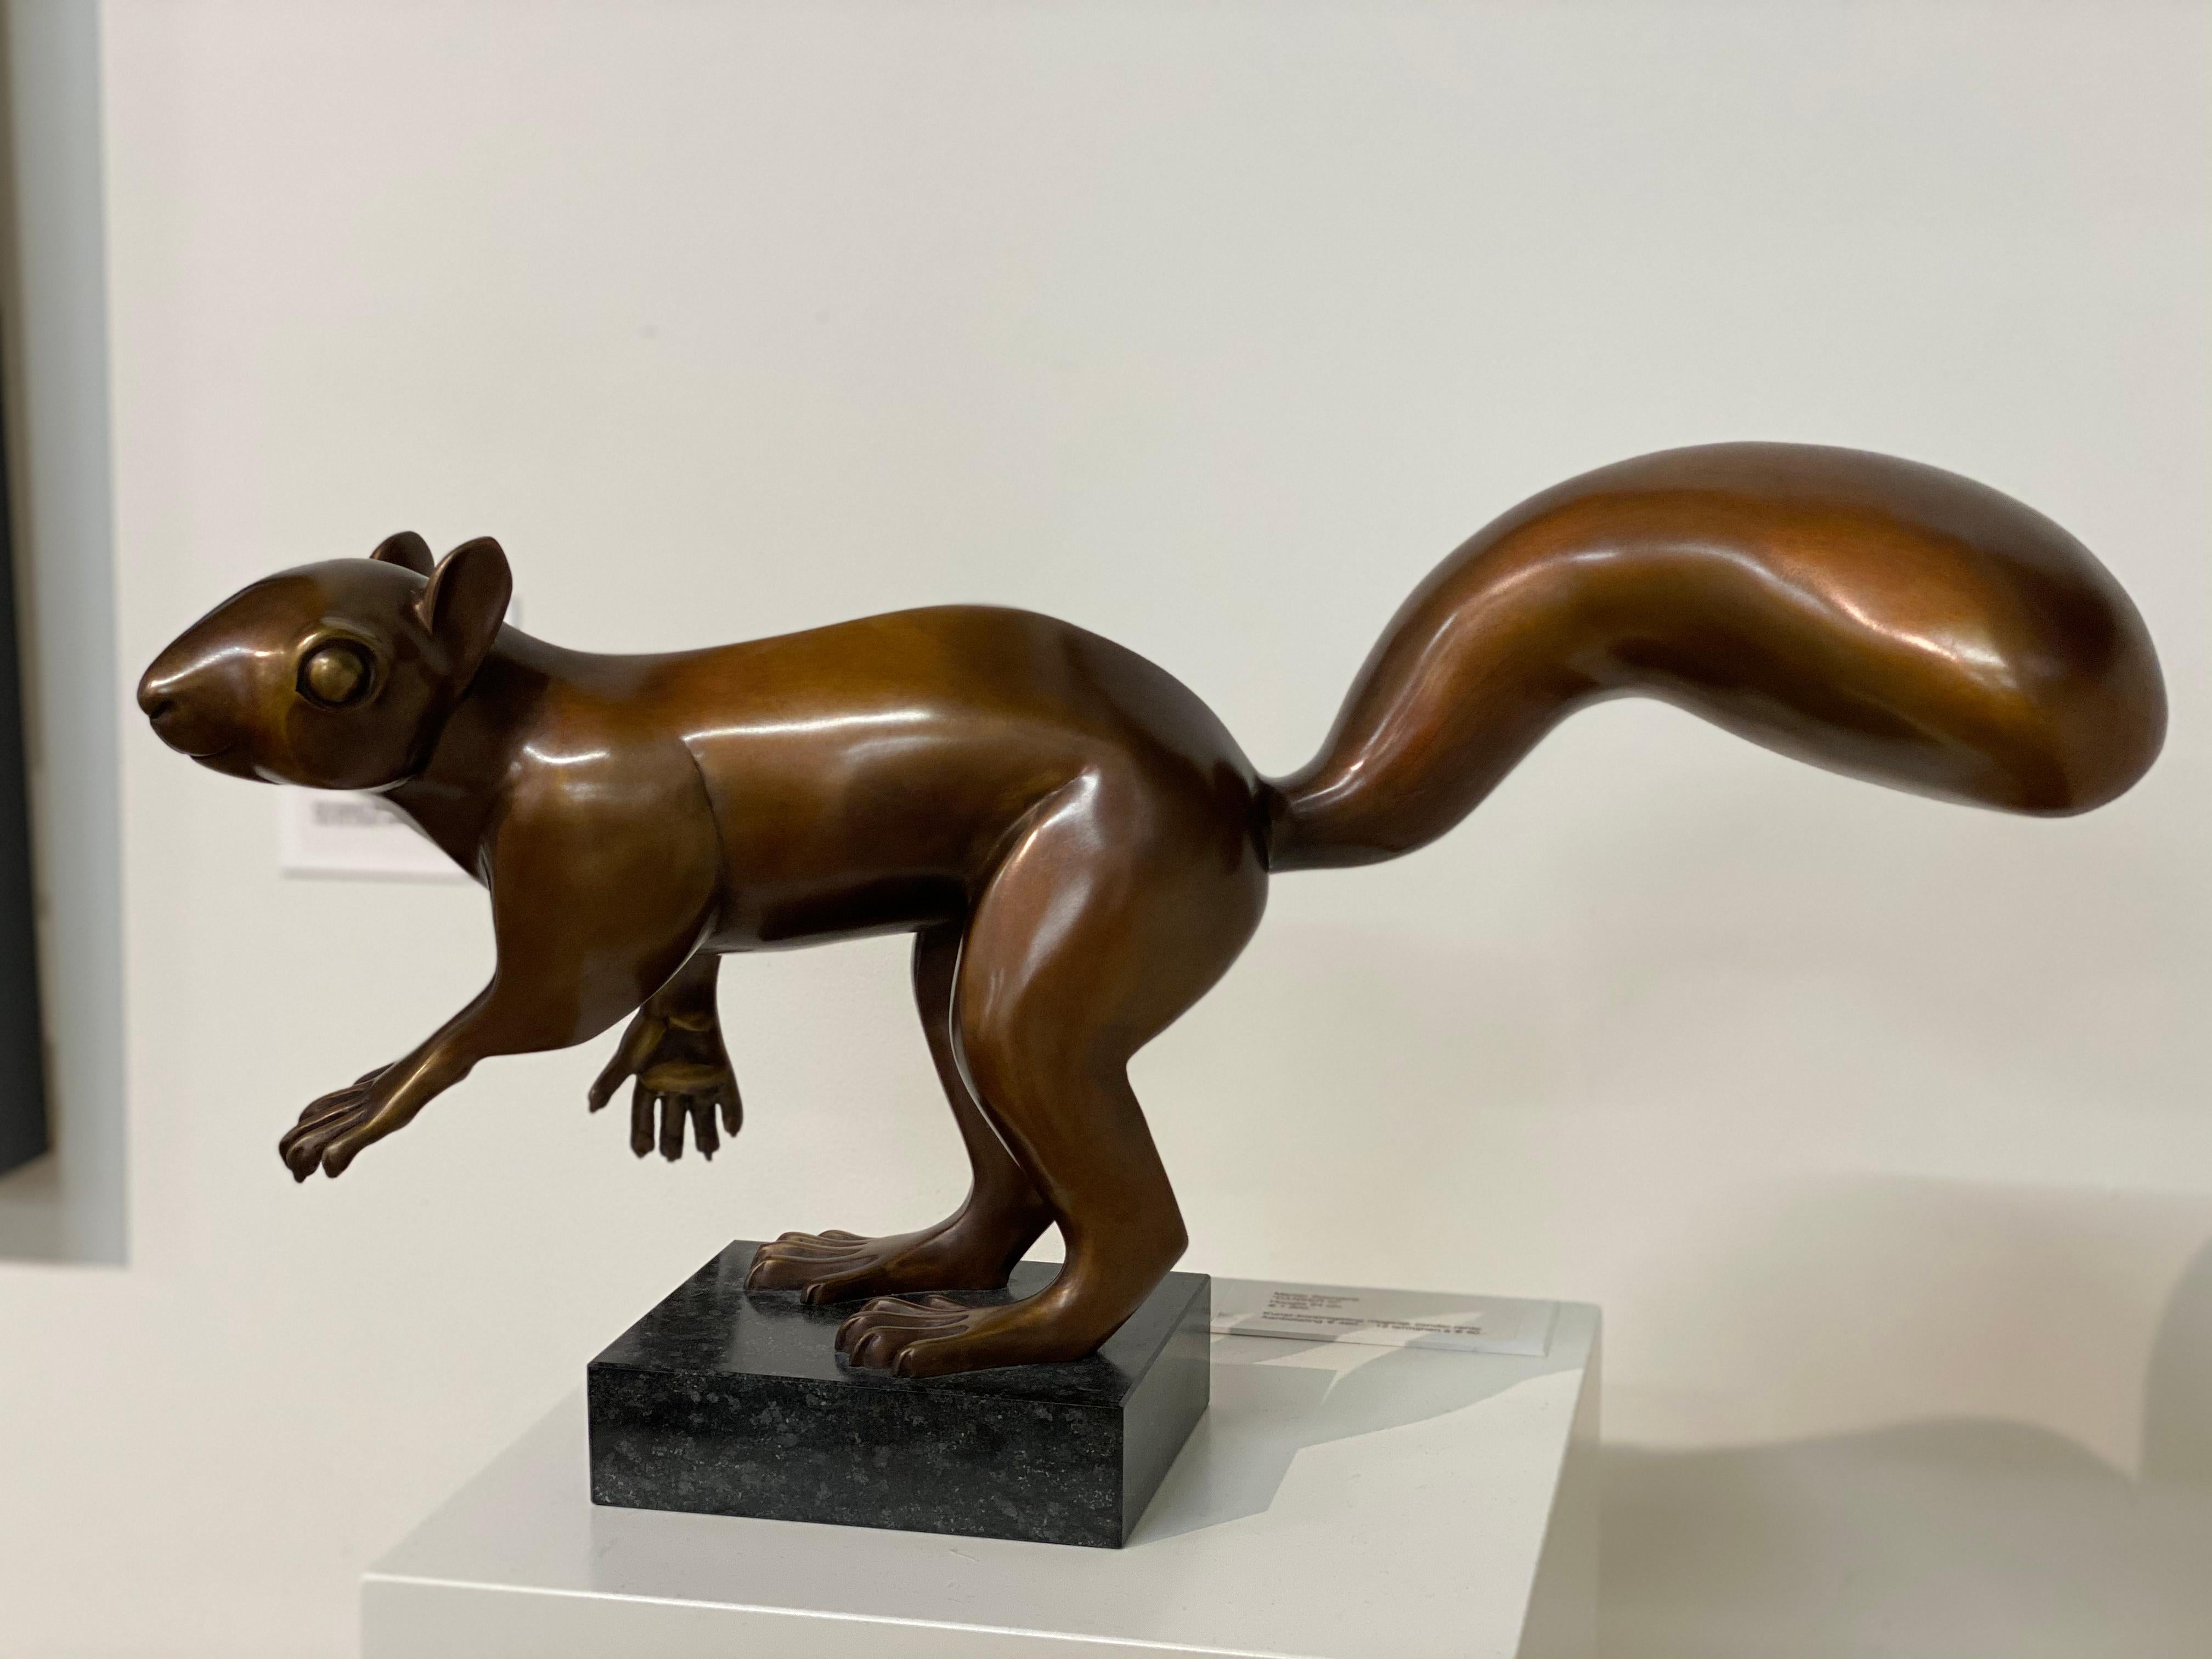 Squirrel- 21st Century Dutch Bronze Sculpture of a Squirrel - Gold Abstract Sculpture by Frans van Straaten